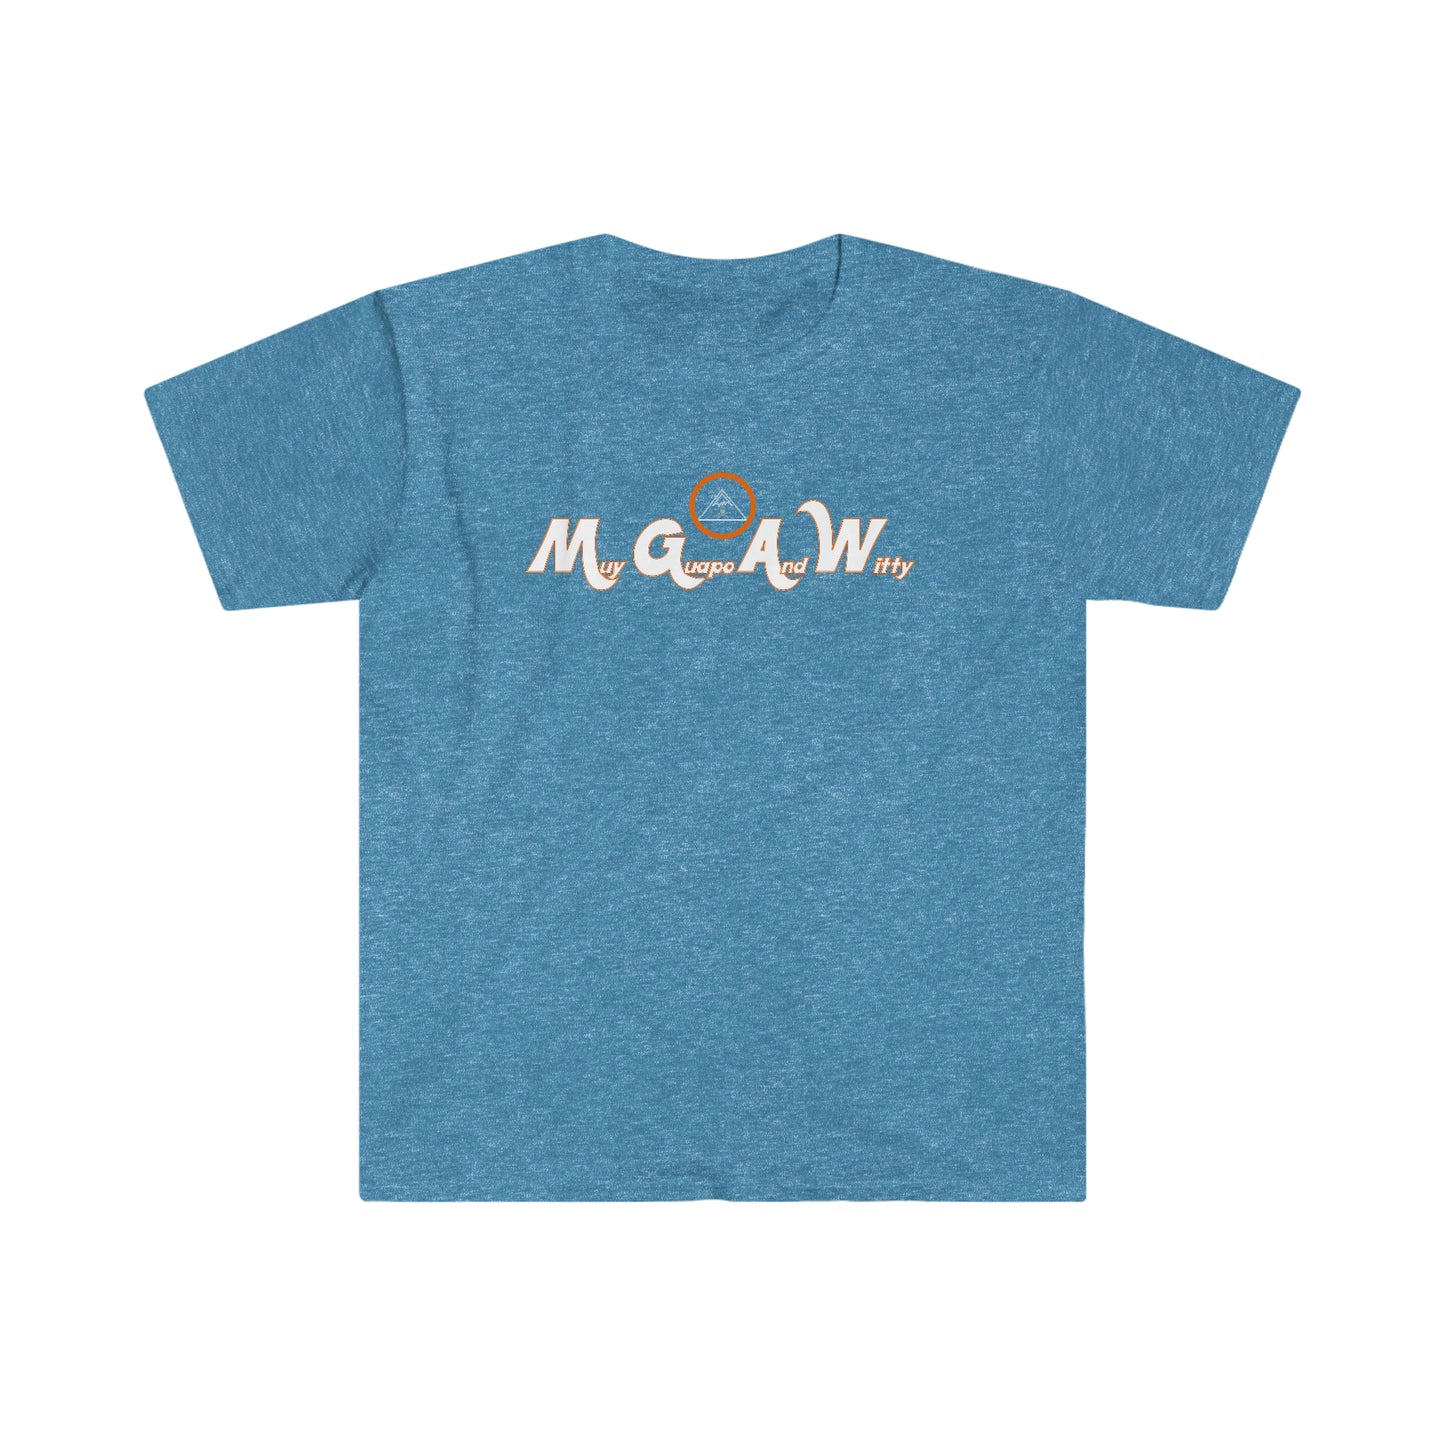 Muy Guapo And Witty – MGAW - T-Shirt